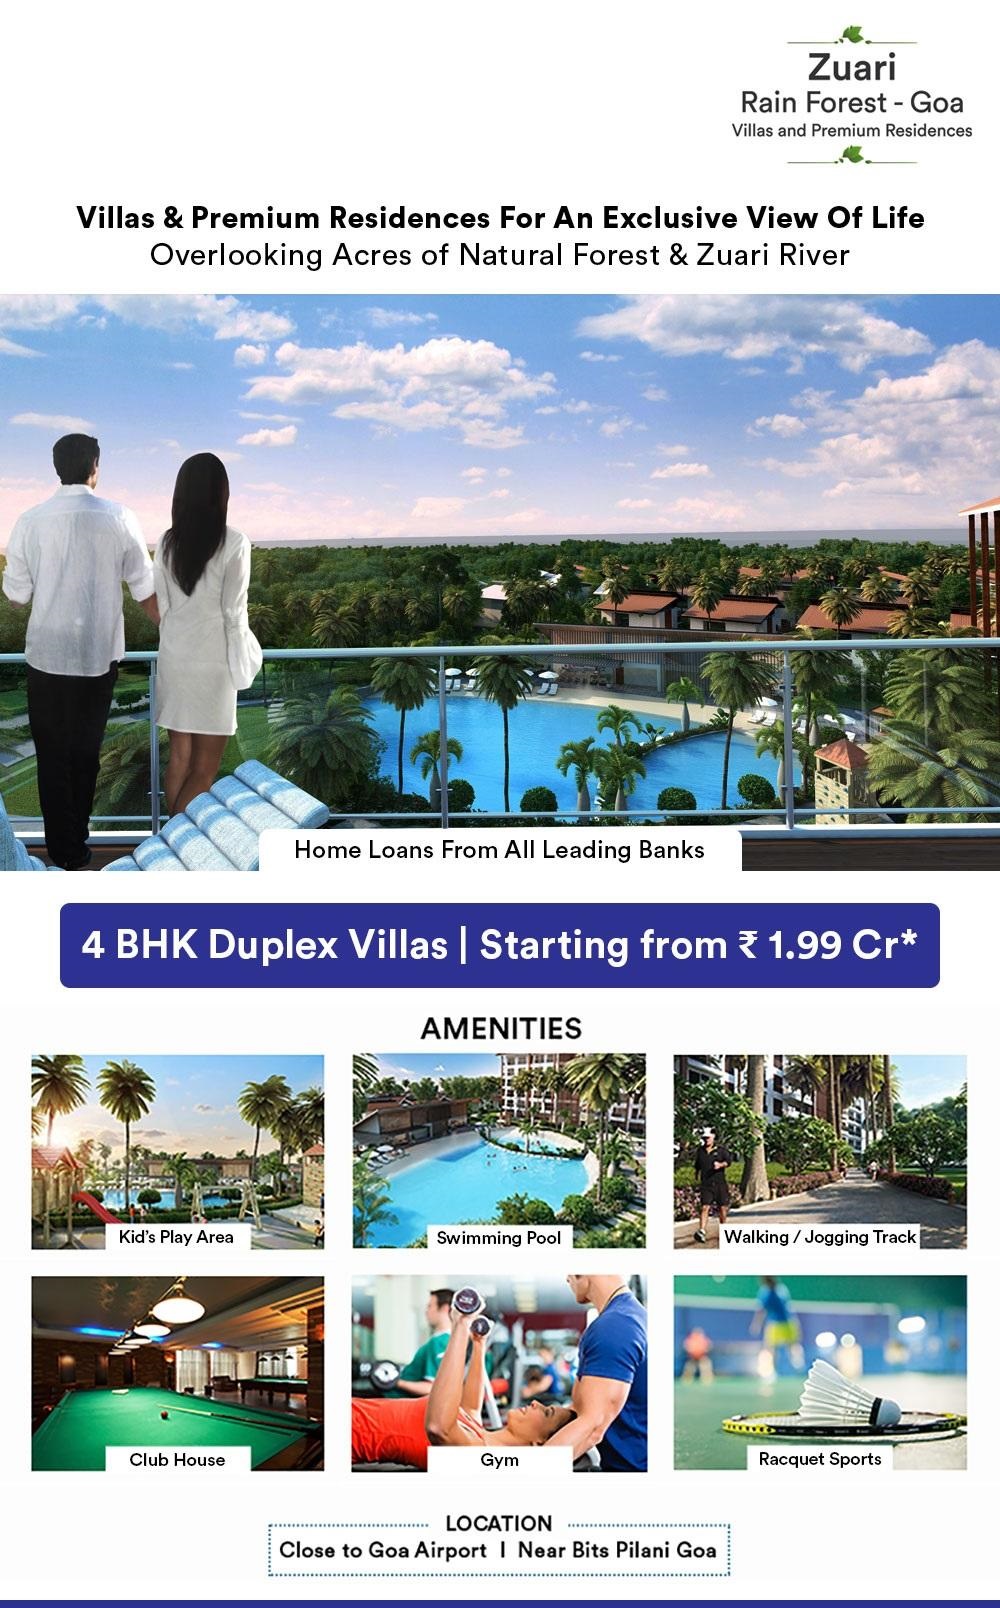 Presenting 4 bhk duplex villas at Rs 1.99 Cr. at Zuari Rain Forest in Goa